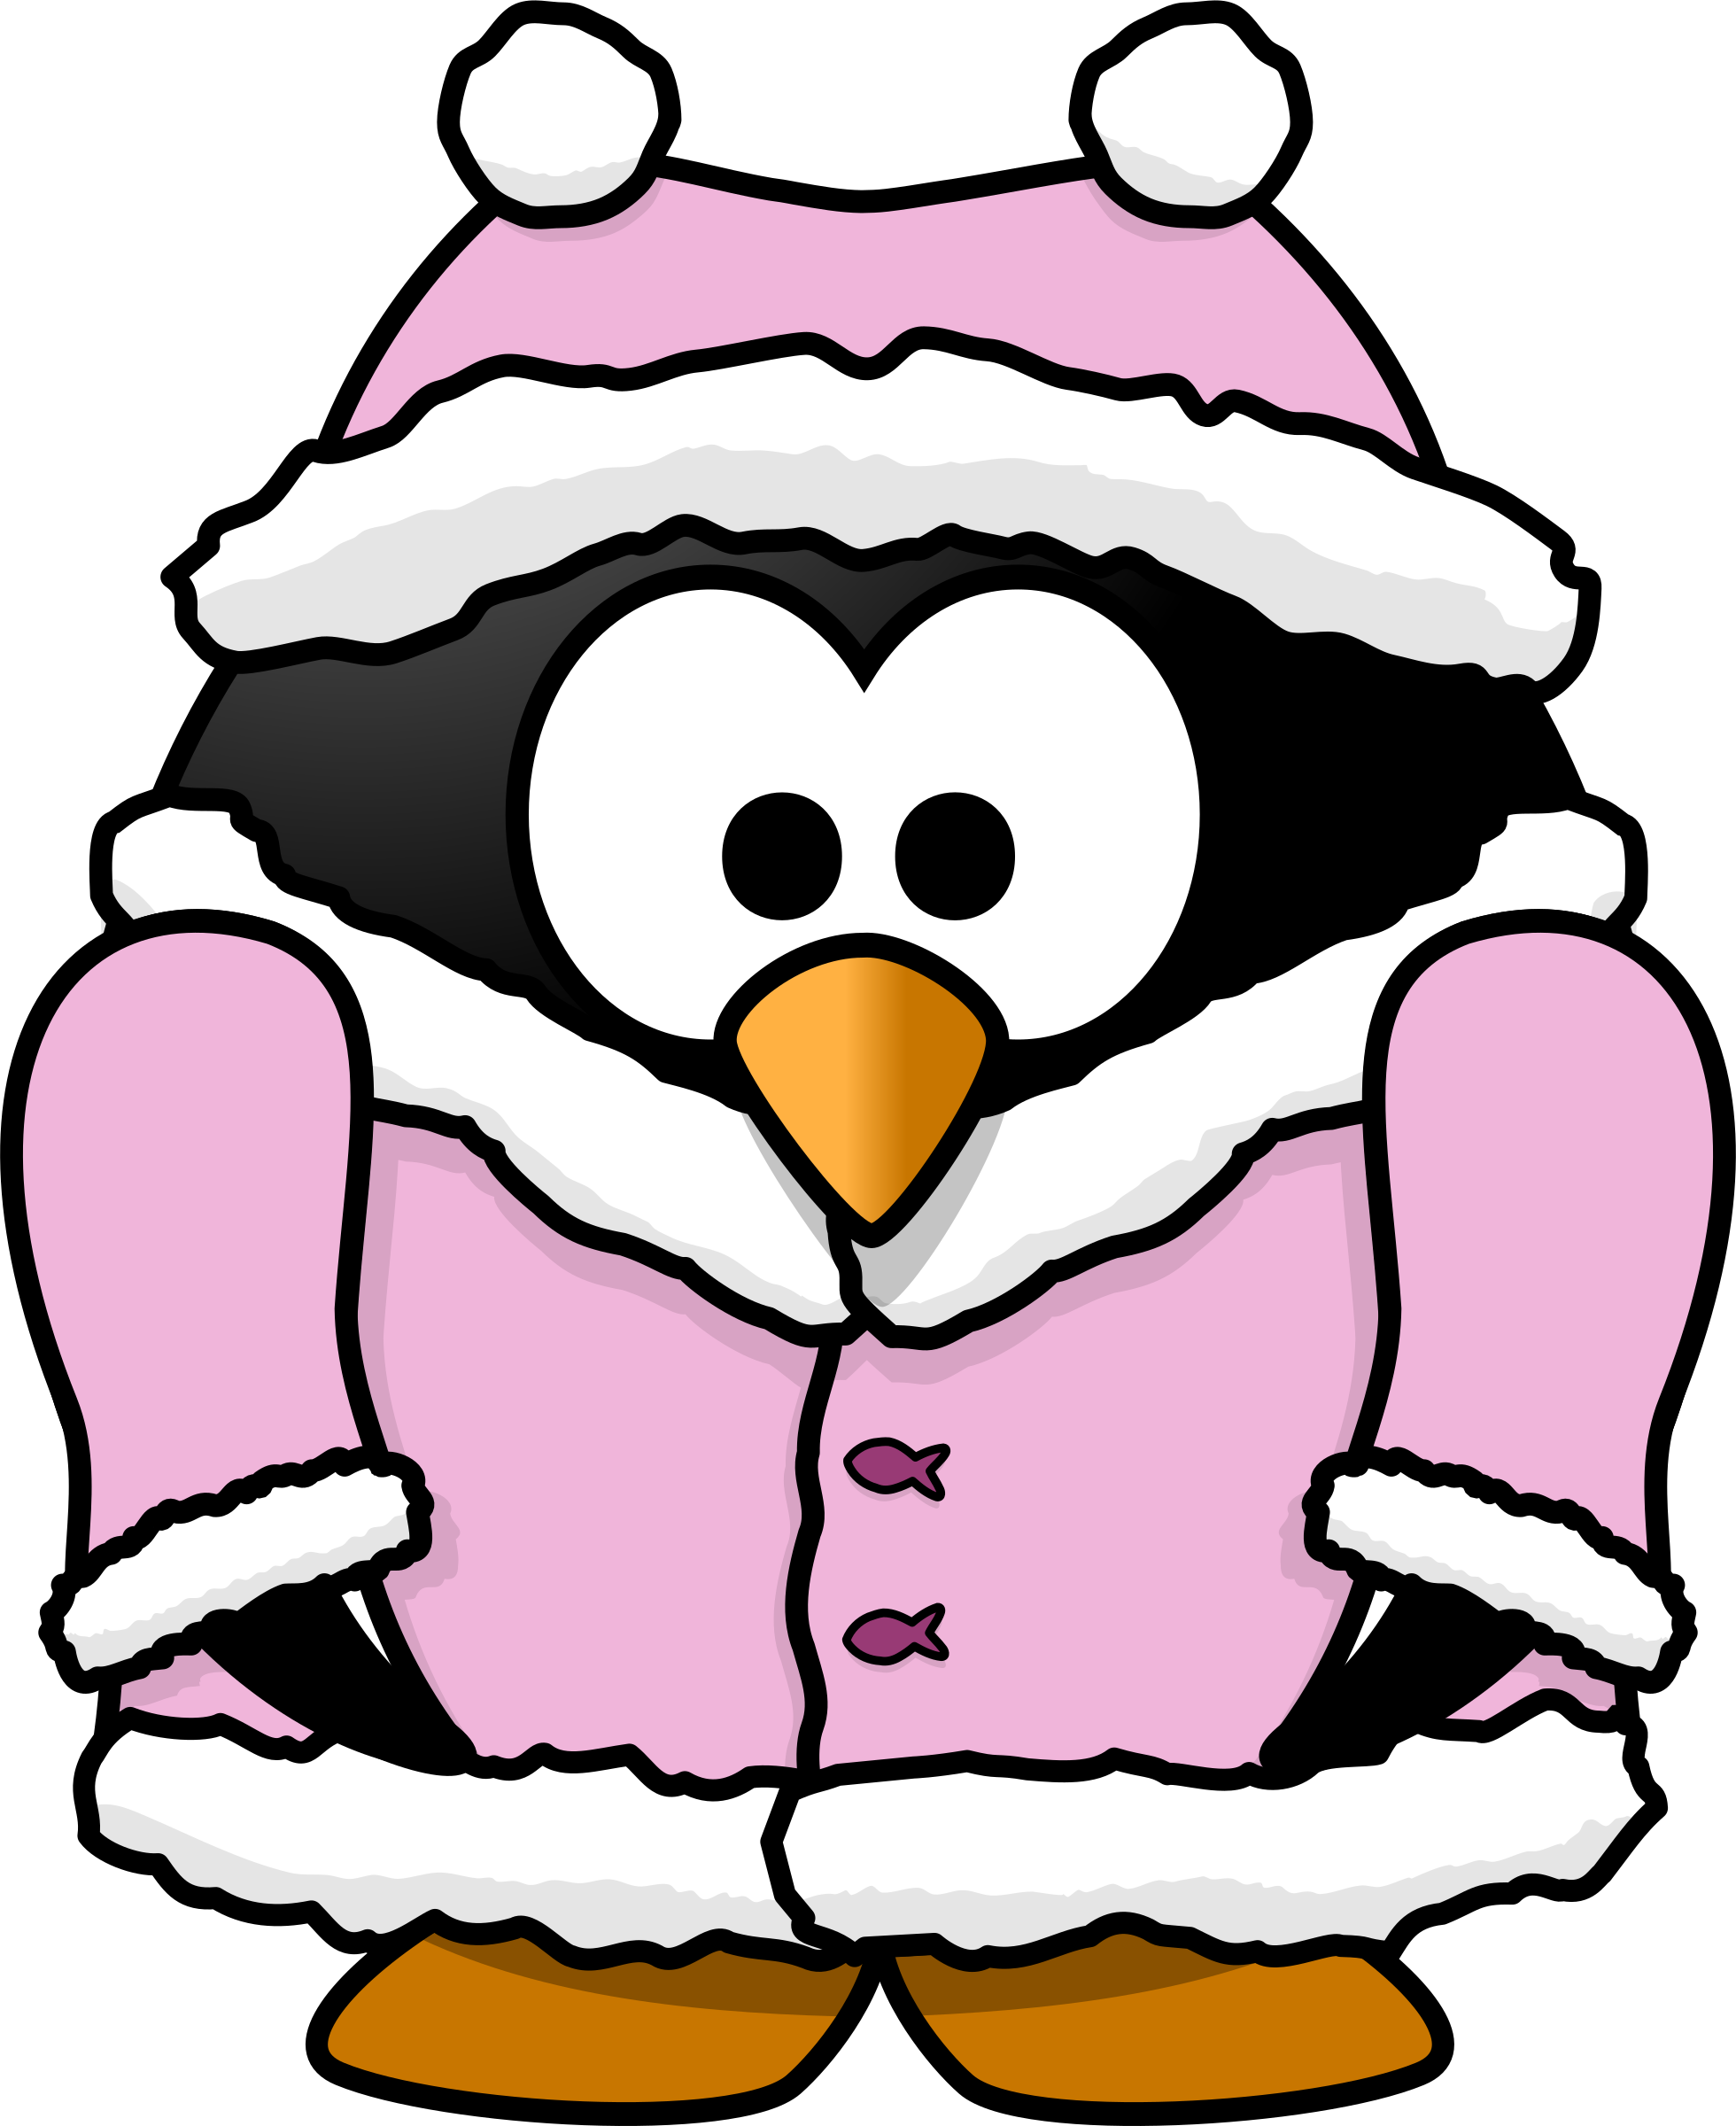 Penguin chick big image. Woodland clipart winter